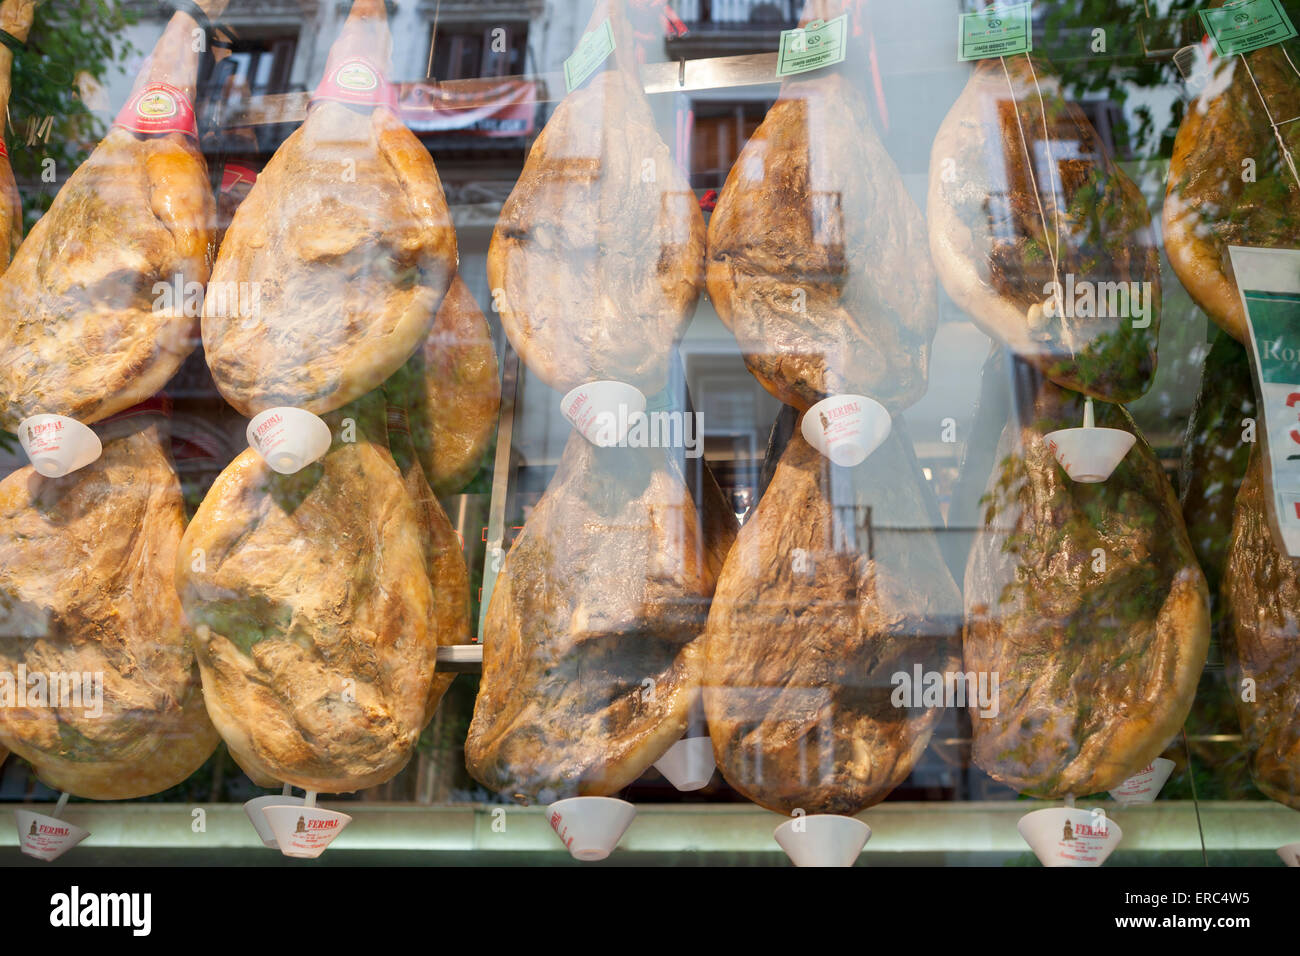 Jamon, Spanish cured ham hanging in a shop window. Madrid, Spain. Stock Photo